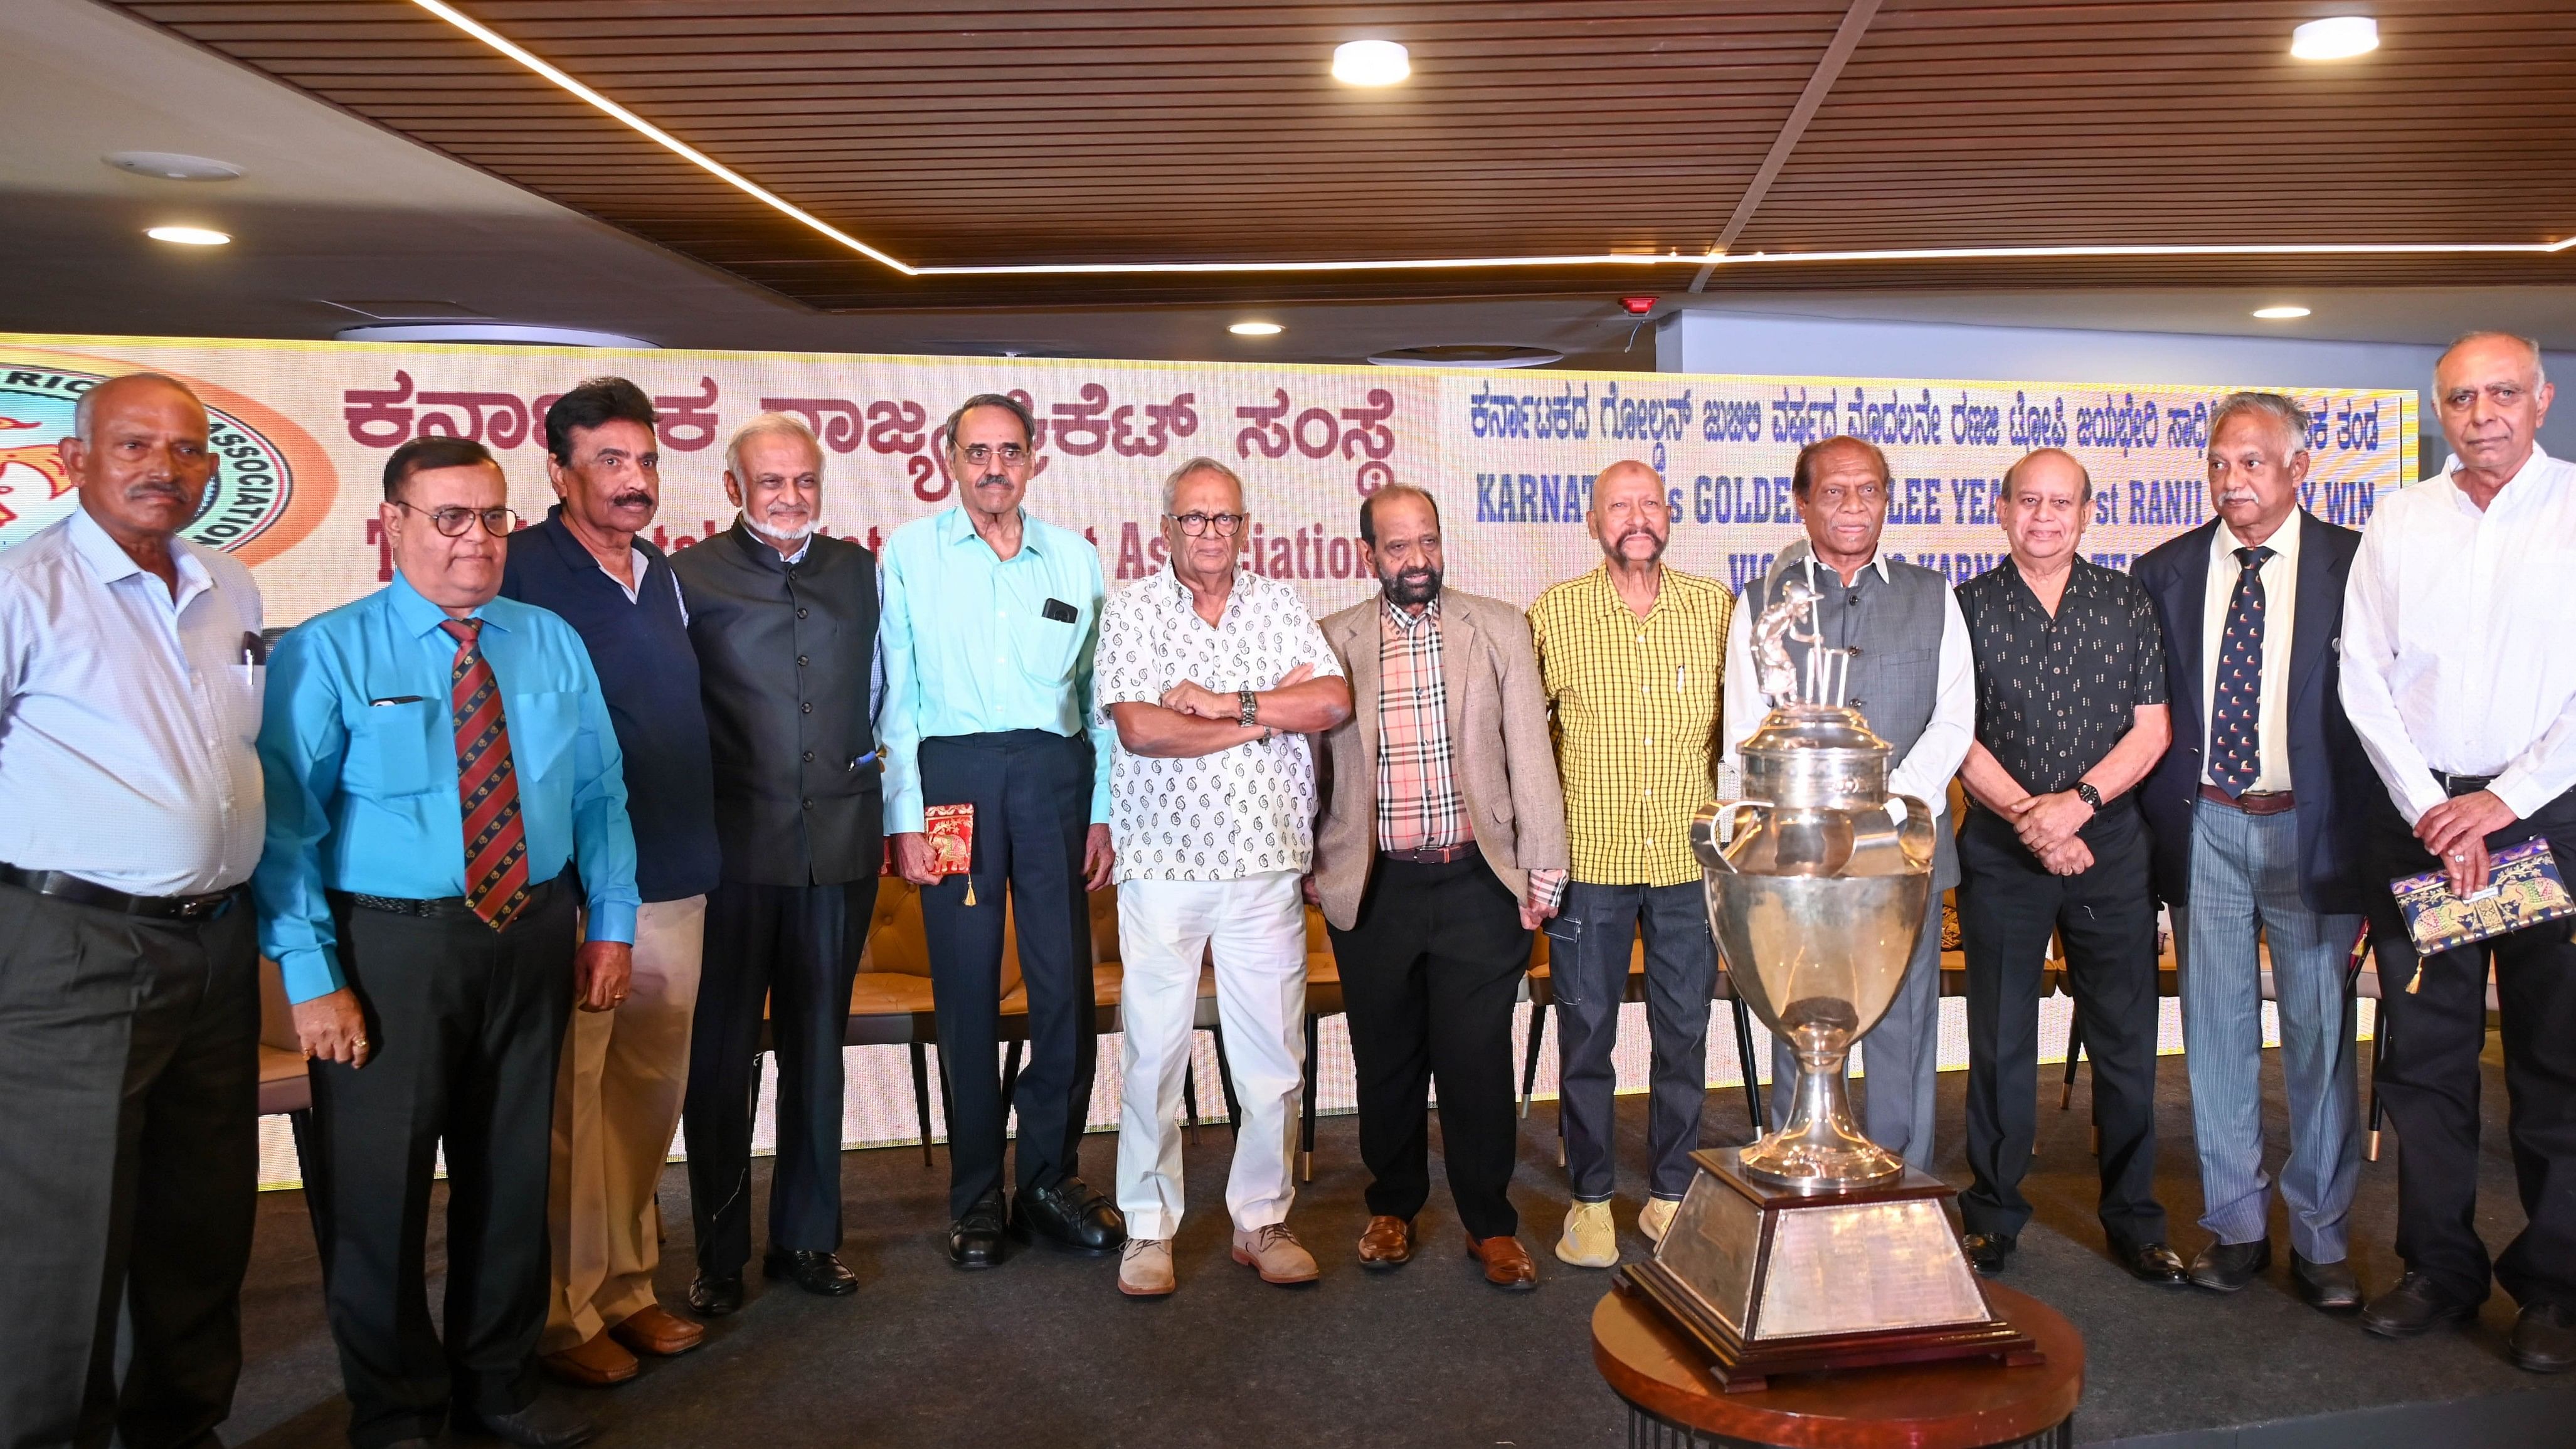 <div class="paragraphs"><p>Members of Karnataka’s 1974 Ranji Trophy winning team pose with the trophy during a felicitation ceremony by KSCA to commemorate the Golden jubilee of the win at the M Chinnaswamy Stadium in Bengaluru on Wednesday.(From left): S Vijayaprakash, B Siddaramu, R Arun Kumar, Brijesh Patel, BS Chandrasekhar, EAS Prasanna, GR Vishwanath, Syed Kirmani, Sudhakar Rao,B Raghunath,AV Jayaprakash and Sanjay Desai.</p></div>